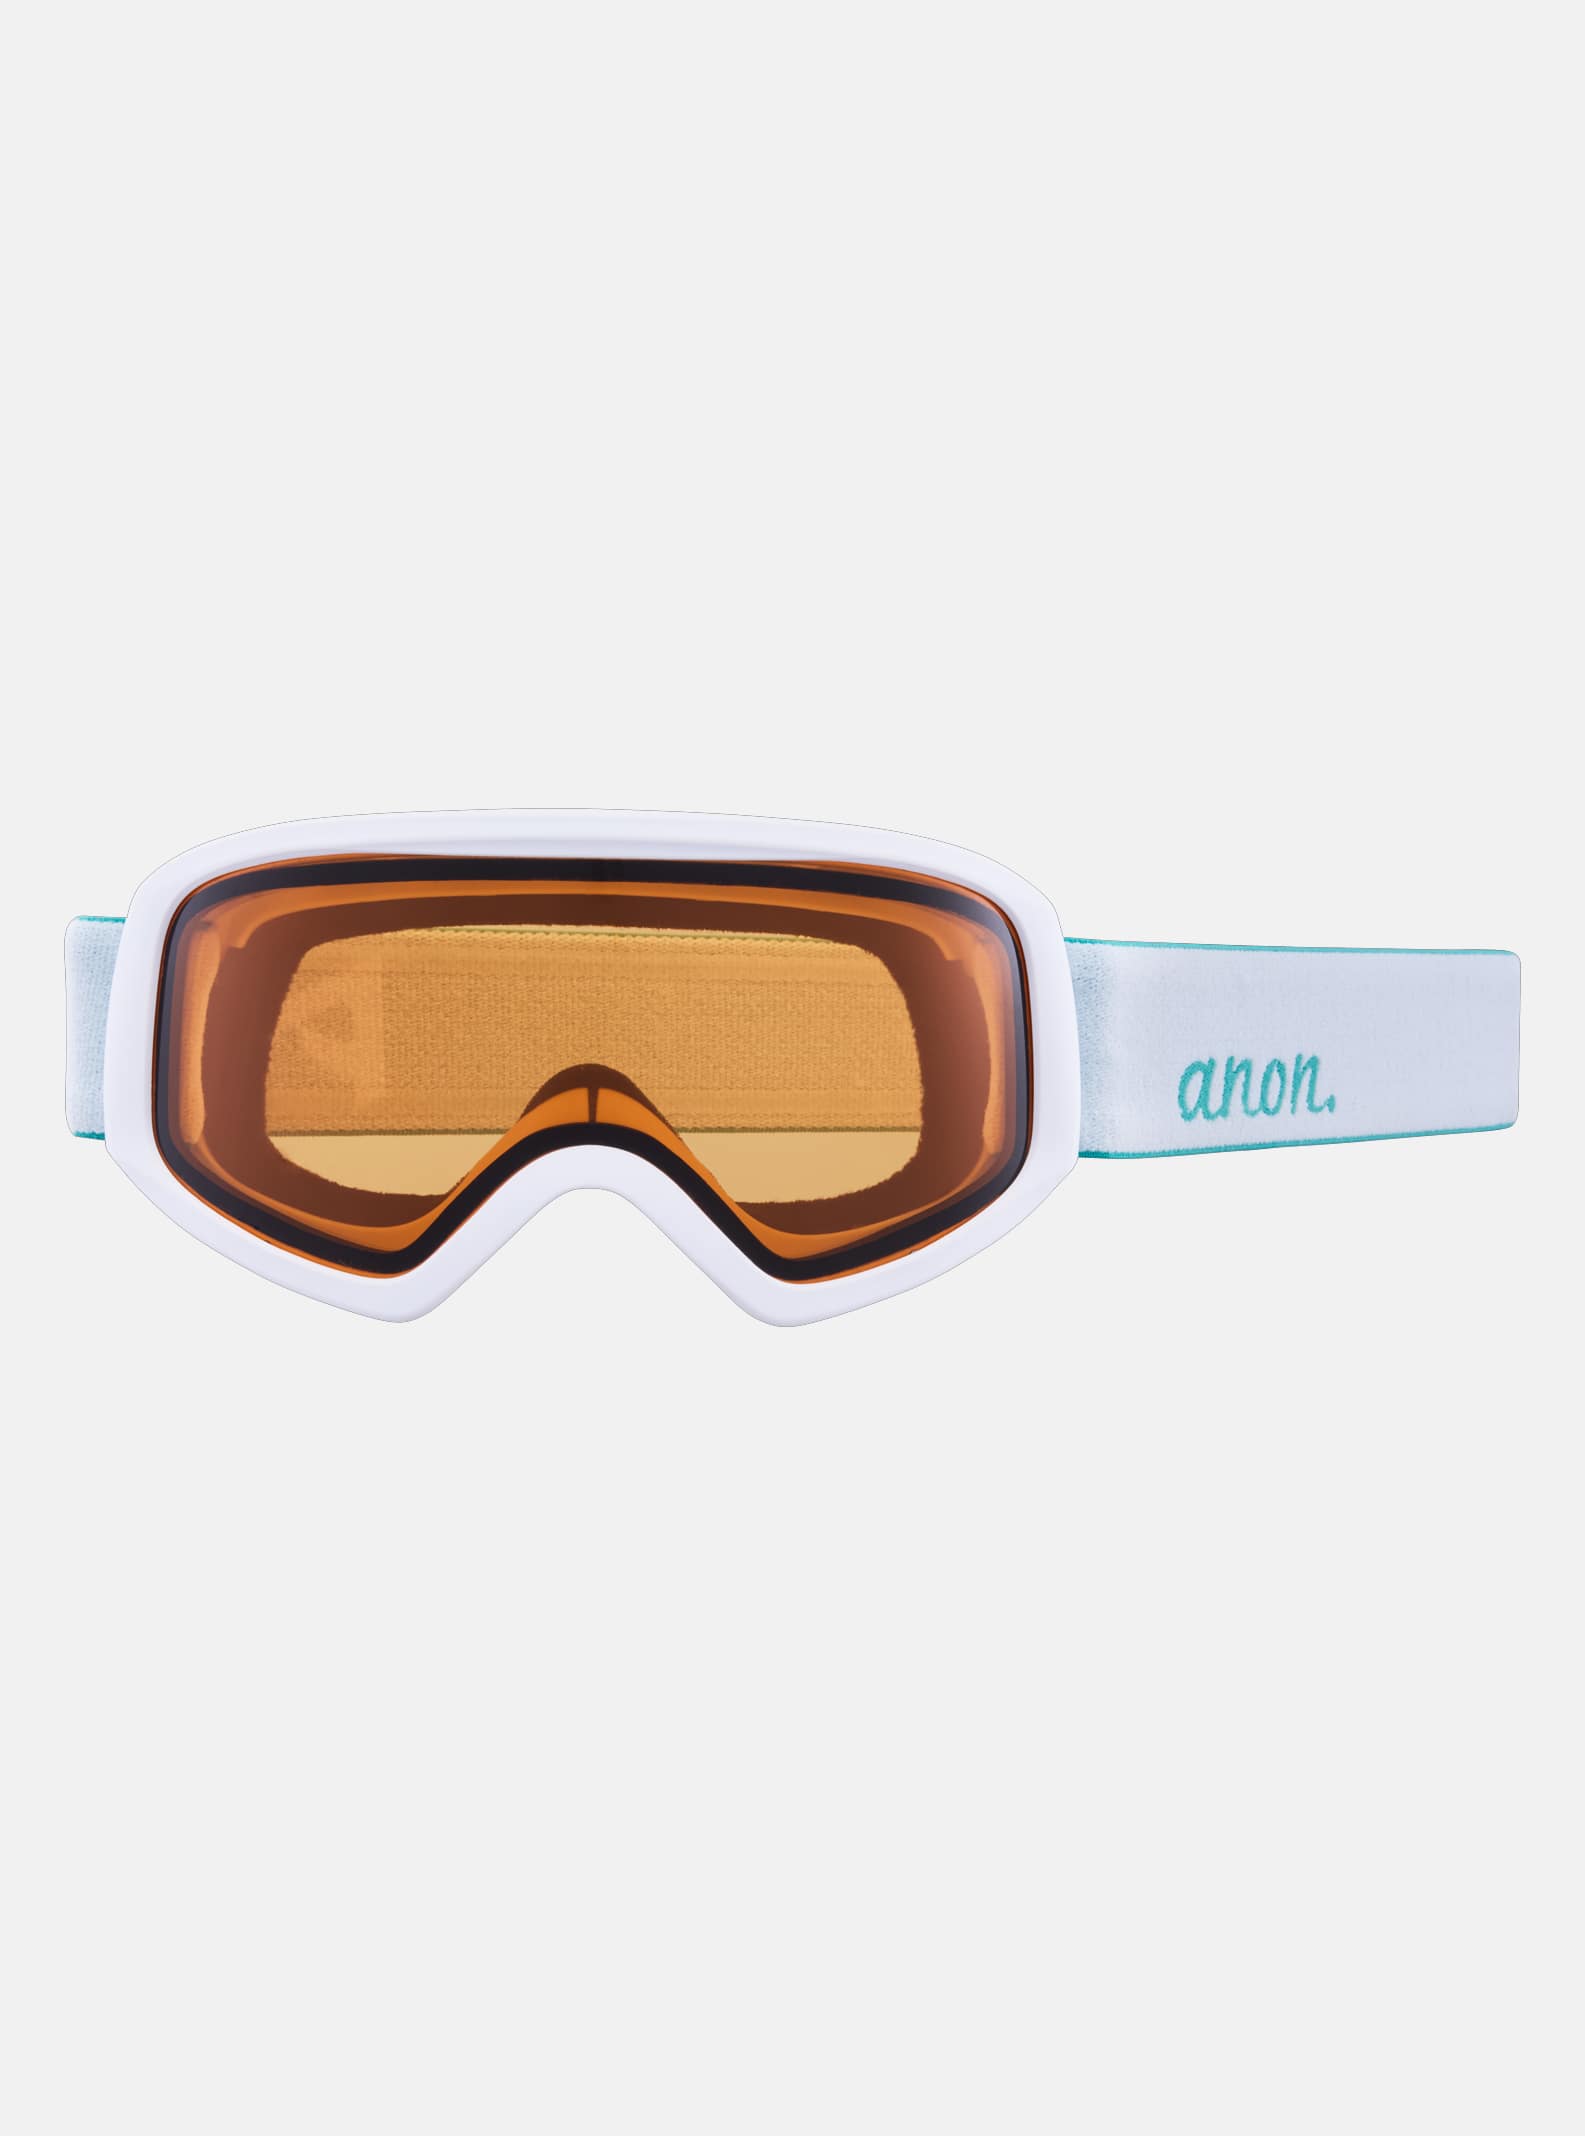 Gafas Snowboard Burton Web Oficial - Anon Insight Goggles + Bonus